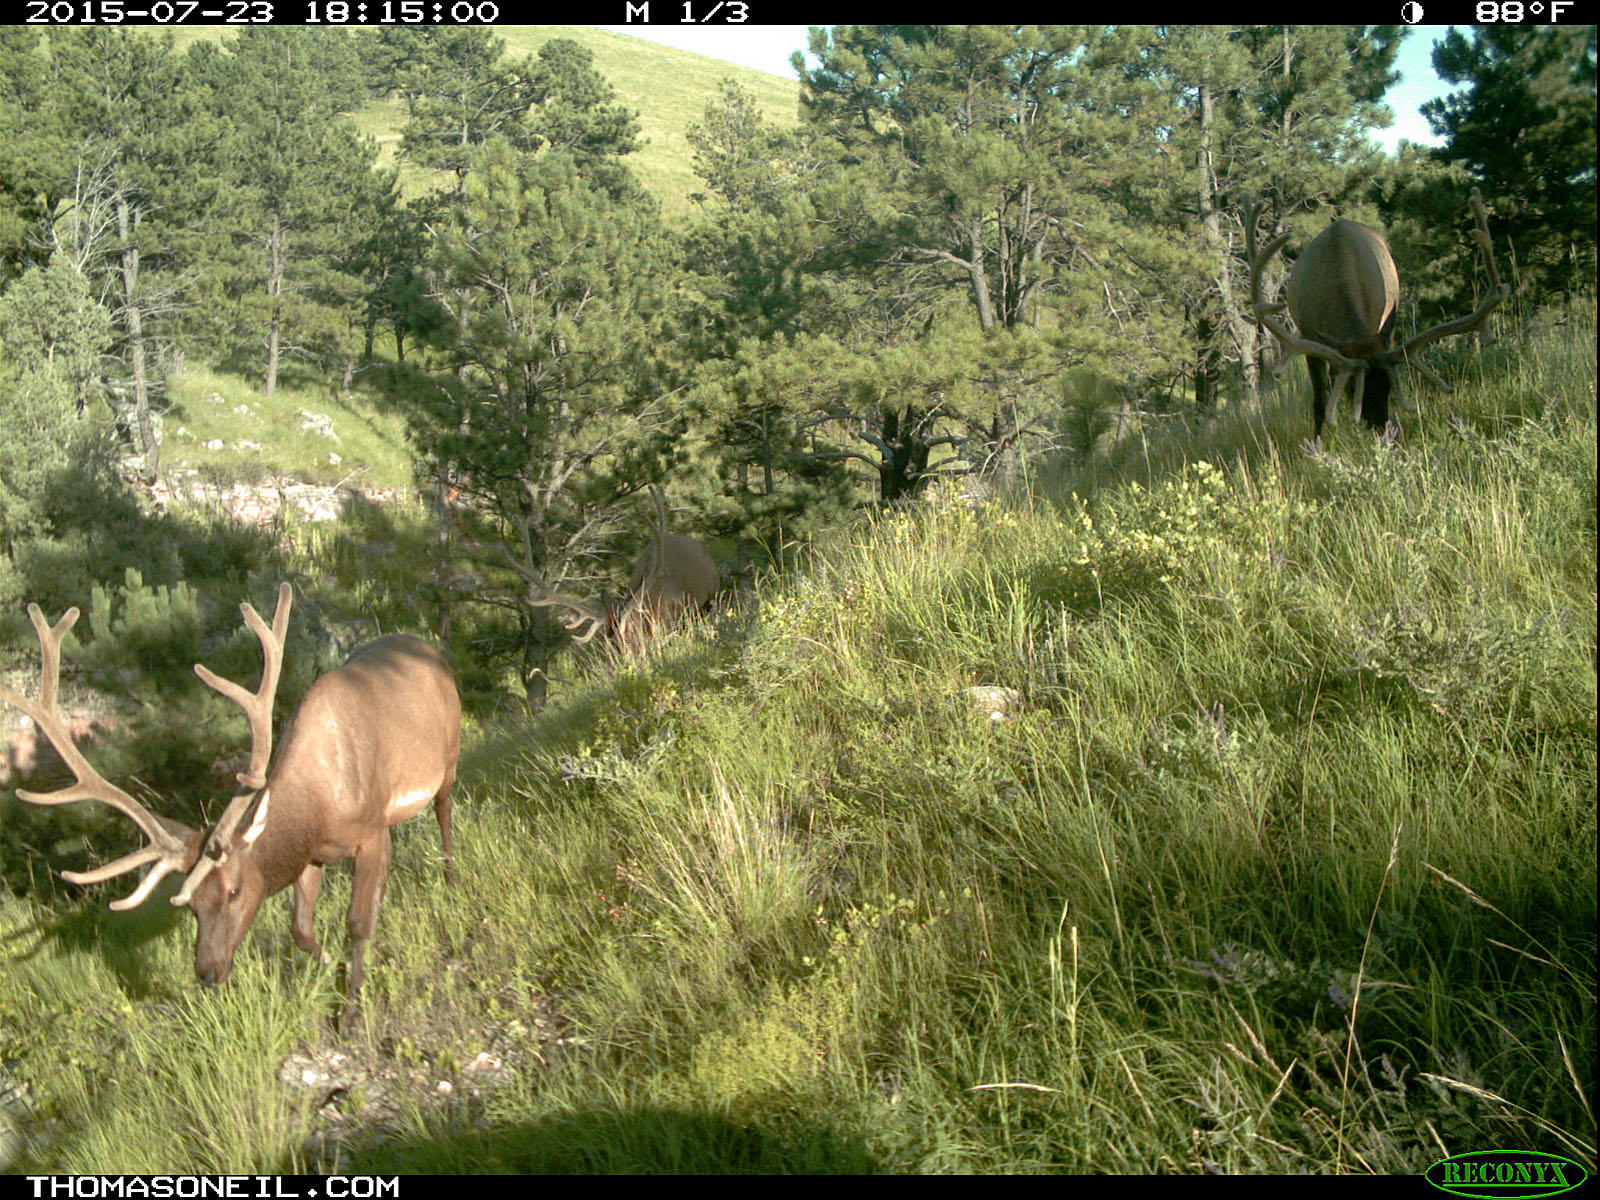 Elk on trailcam, Wind Cave National Park, July 2015,   Click for next photo.